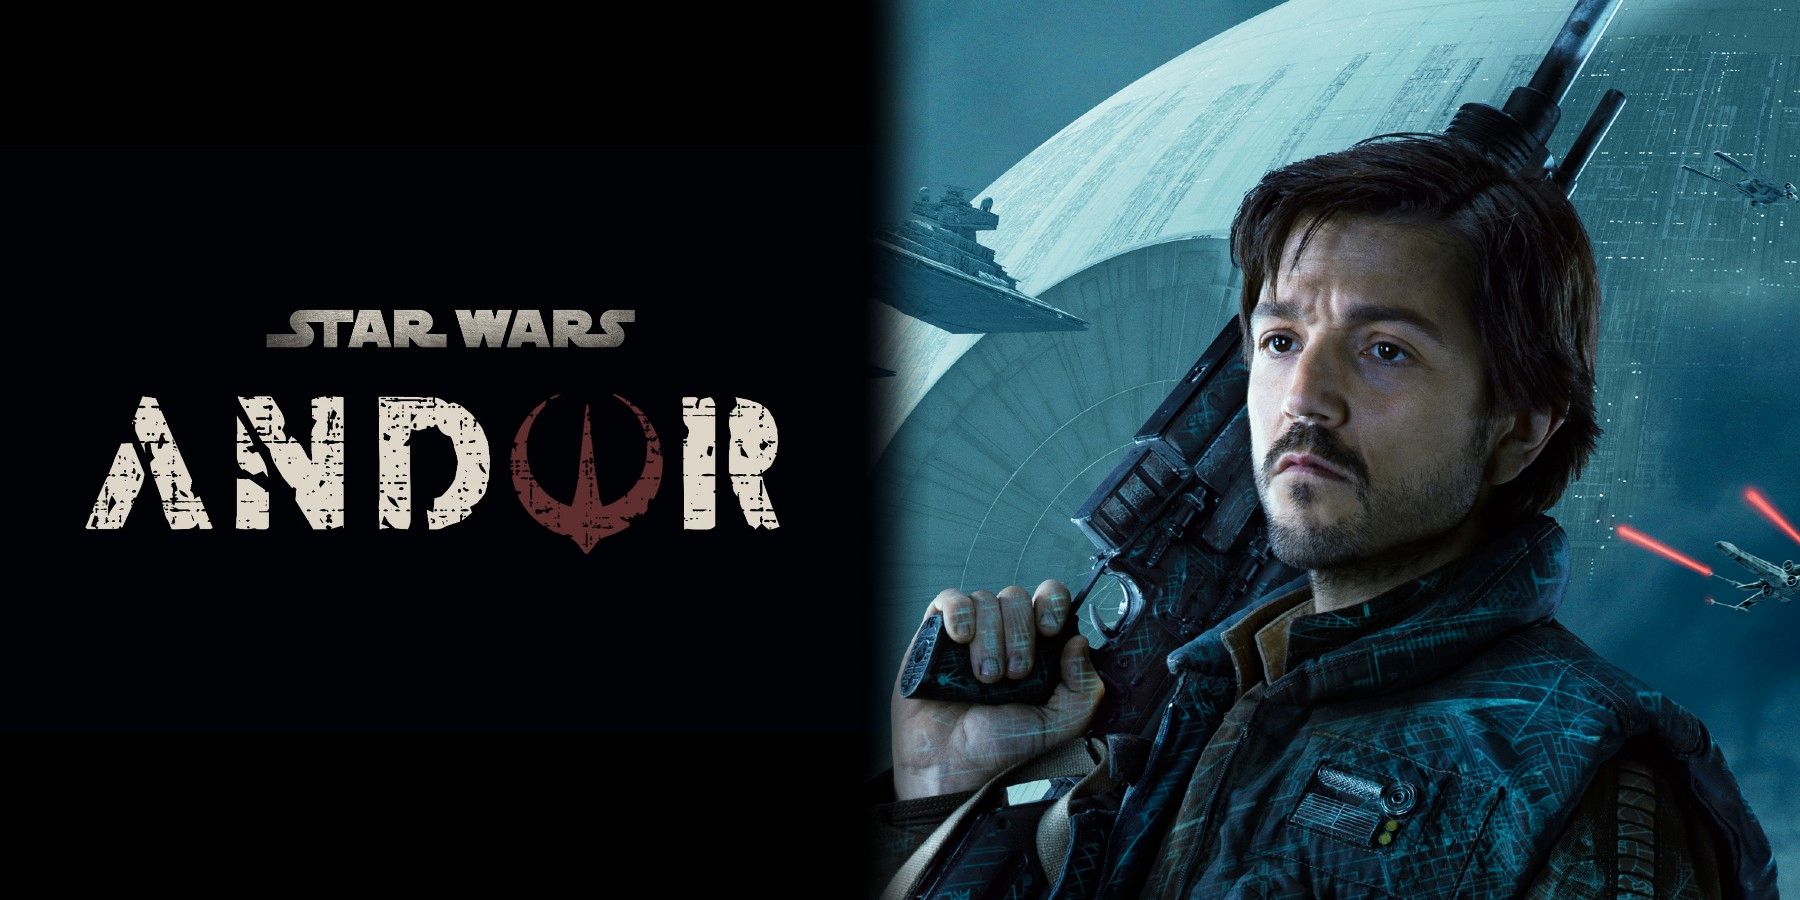 Star Wars: Έκπληκτοι οι φανς με το τρέιλερ – «Αυτός είναι ο Πόλεμος των Άστρων που περιμέναμε πολλοί»